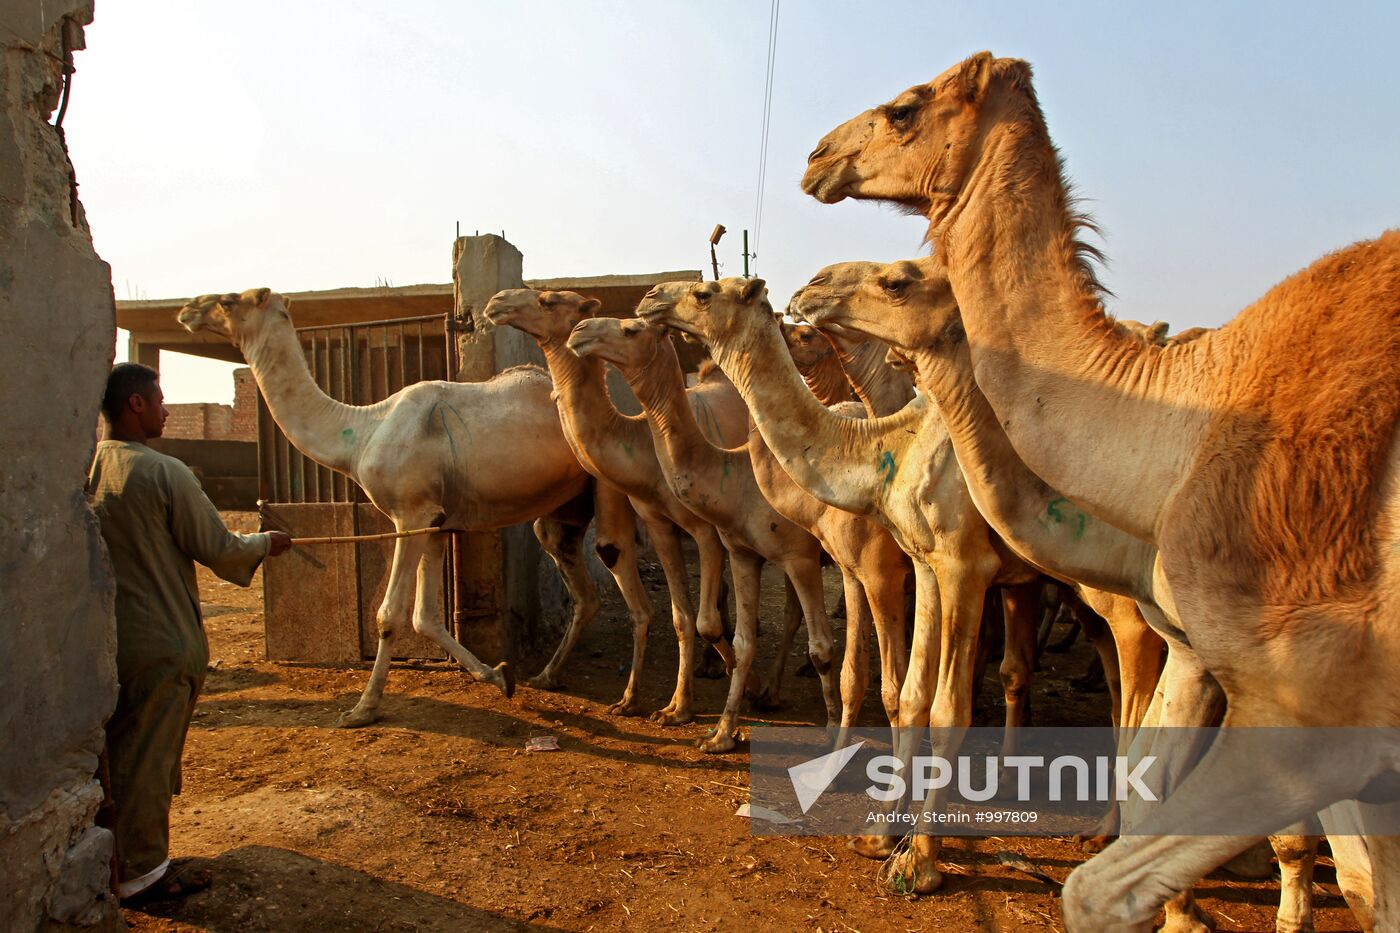 Camel market in Egypt